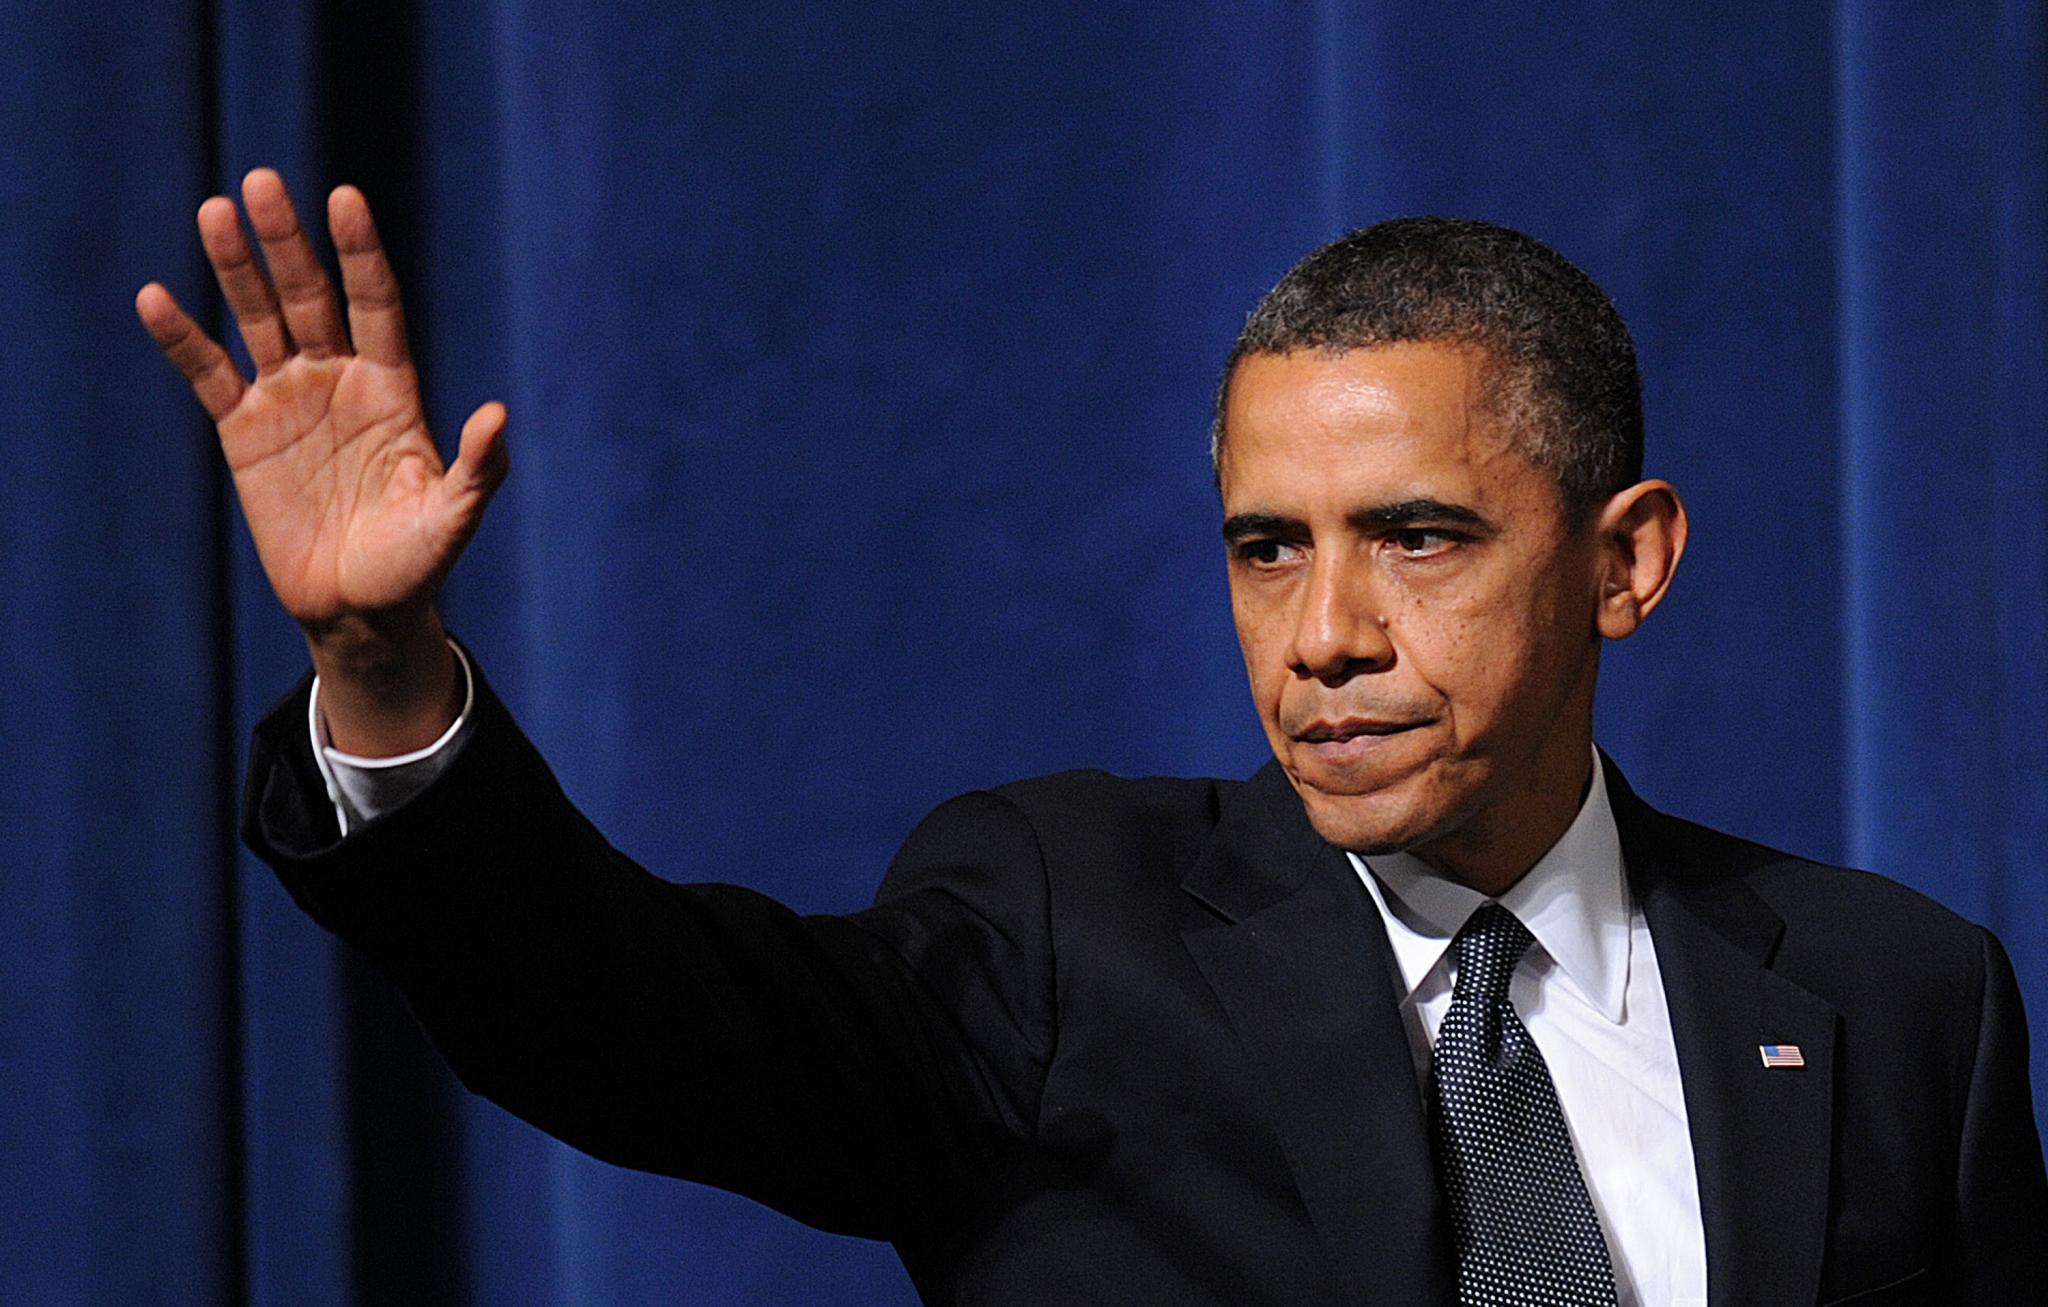 Obama Names Newtown Worst Day of Presidency
